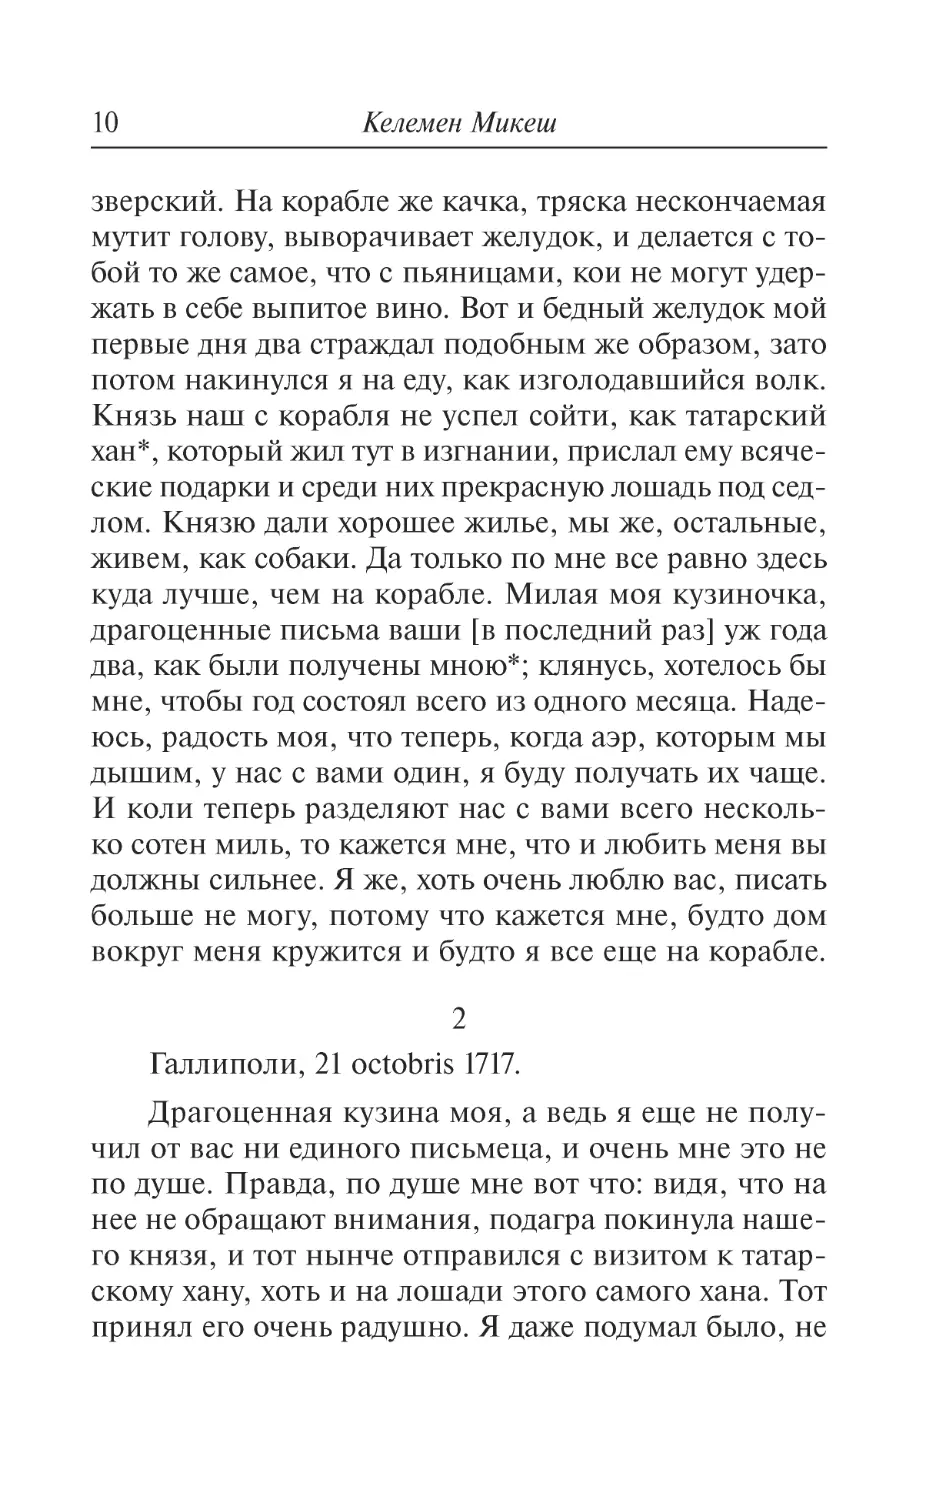 2. Галлиполи, 21 octobris 1717